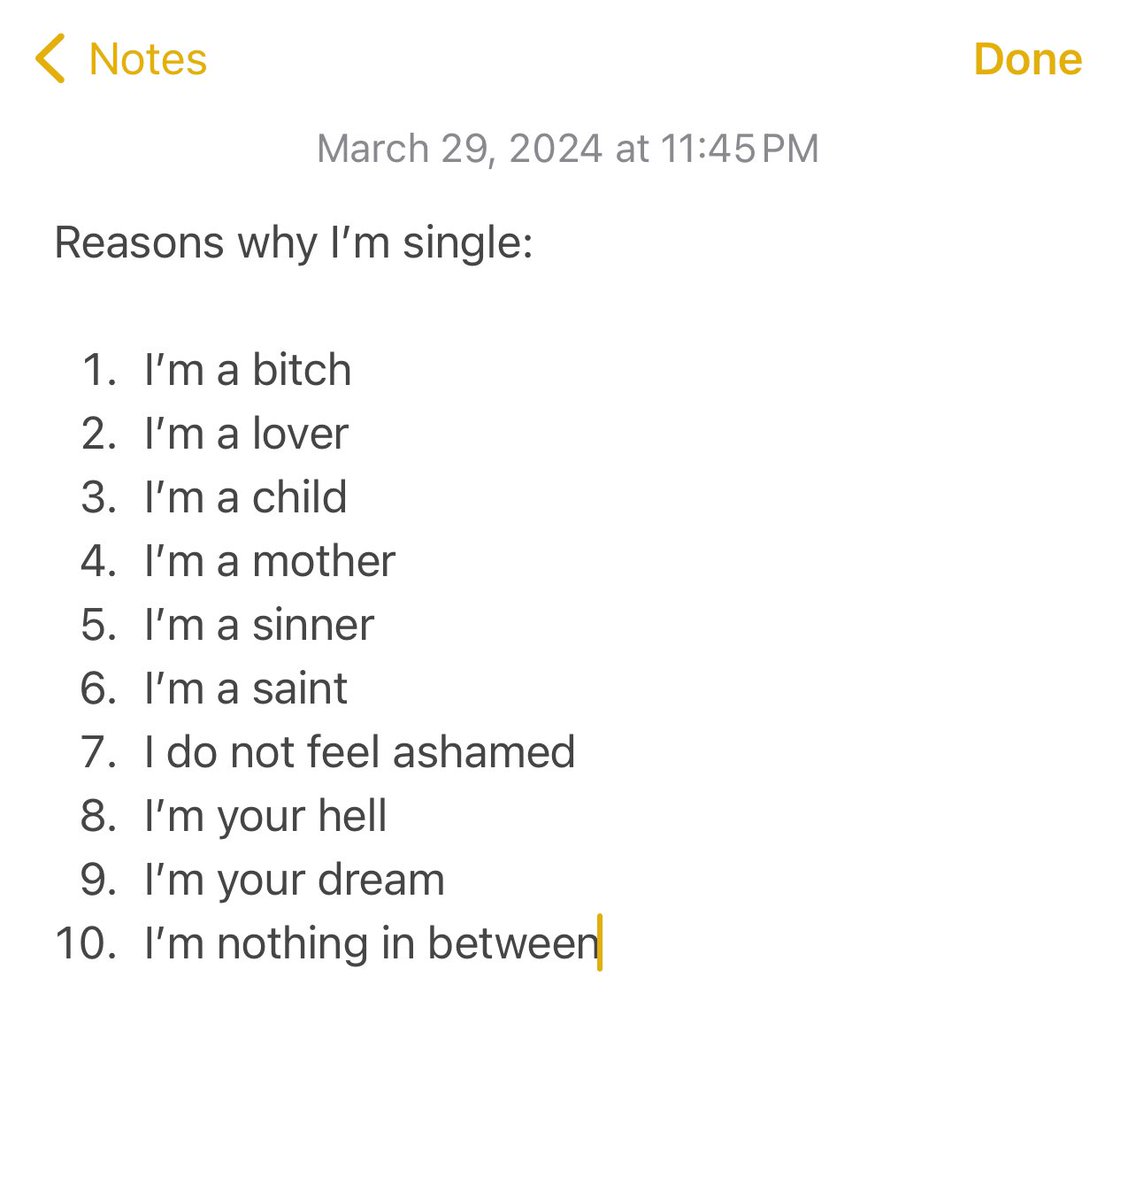 reasons why I’m single